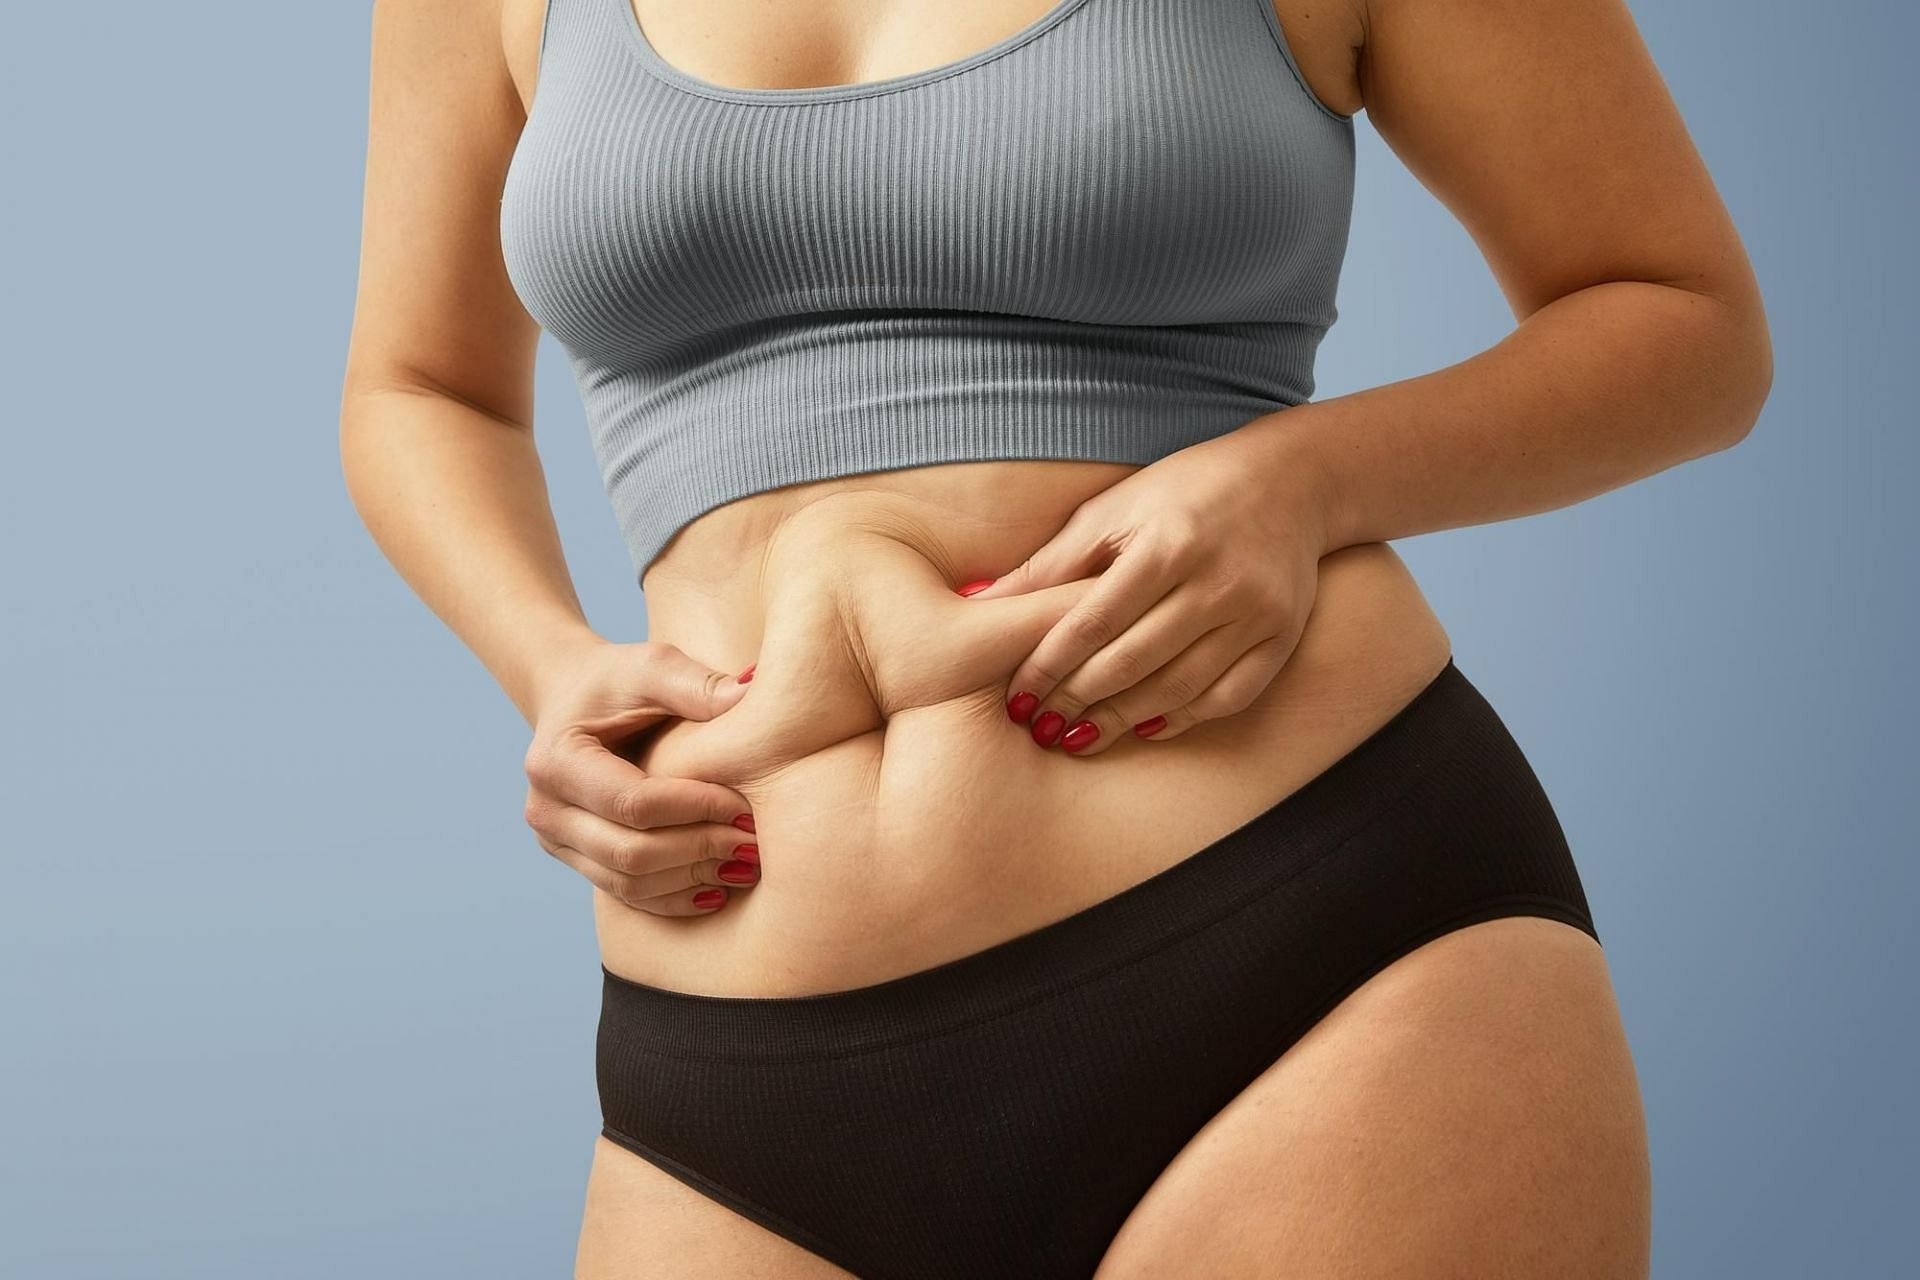 Apron belly is a condition where excess skin is hanging down the abdomen (Image by Anastasia Kazakova on Freepik)